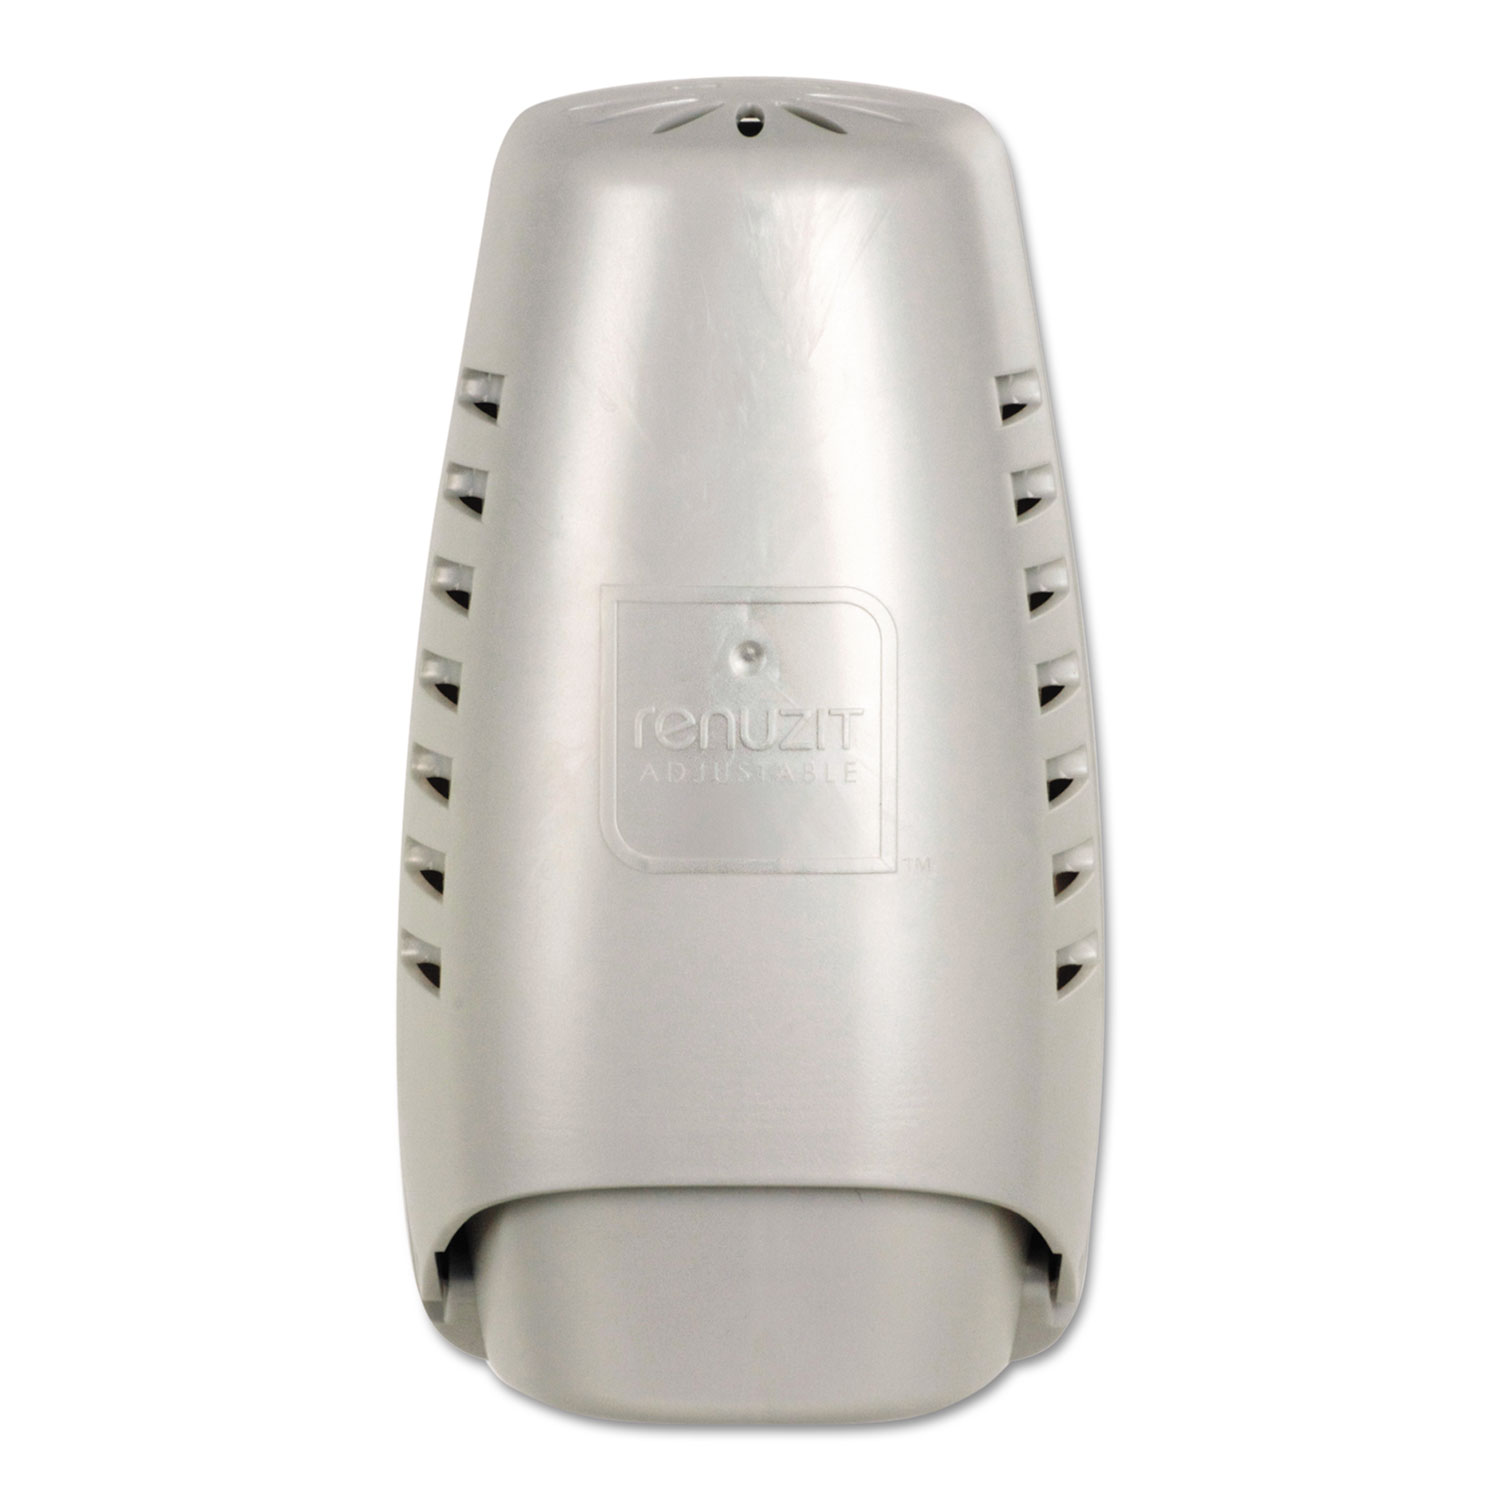  Renuzit 04395CT Wall Mount Air Freshener Dispenser, 3.75 x 3.25 x 7.25, Silver, 6/Carton (DIA04395CT) 